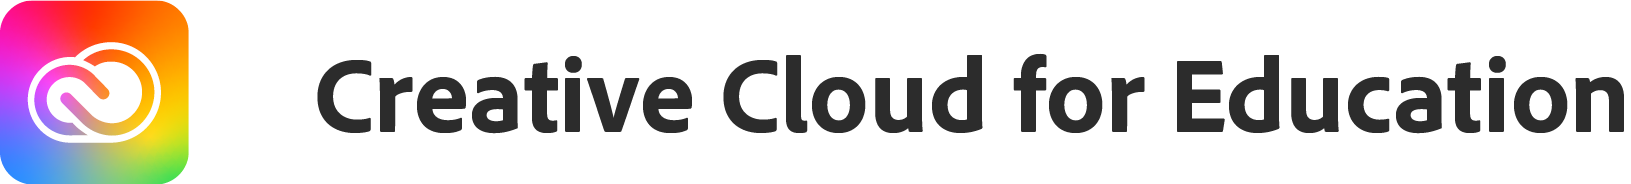 Creative Cloud for Education